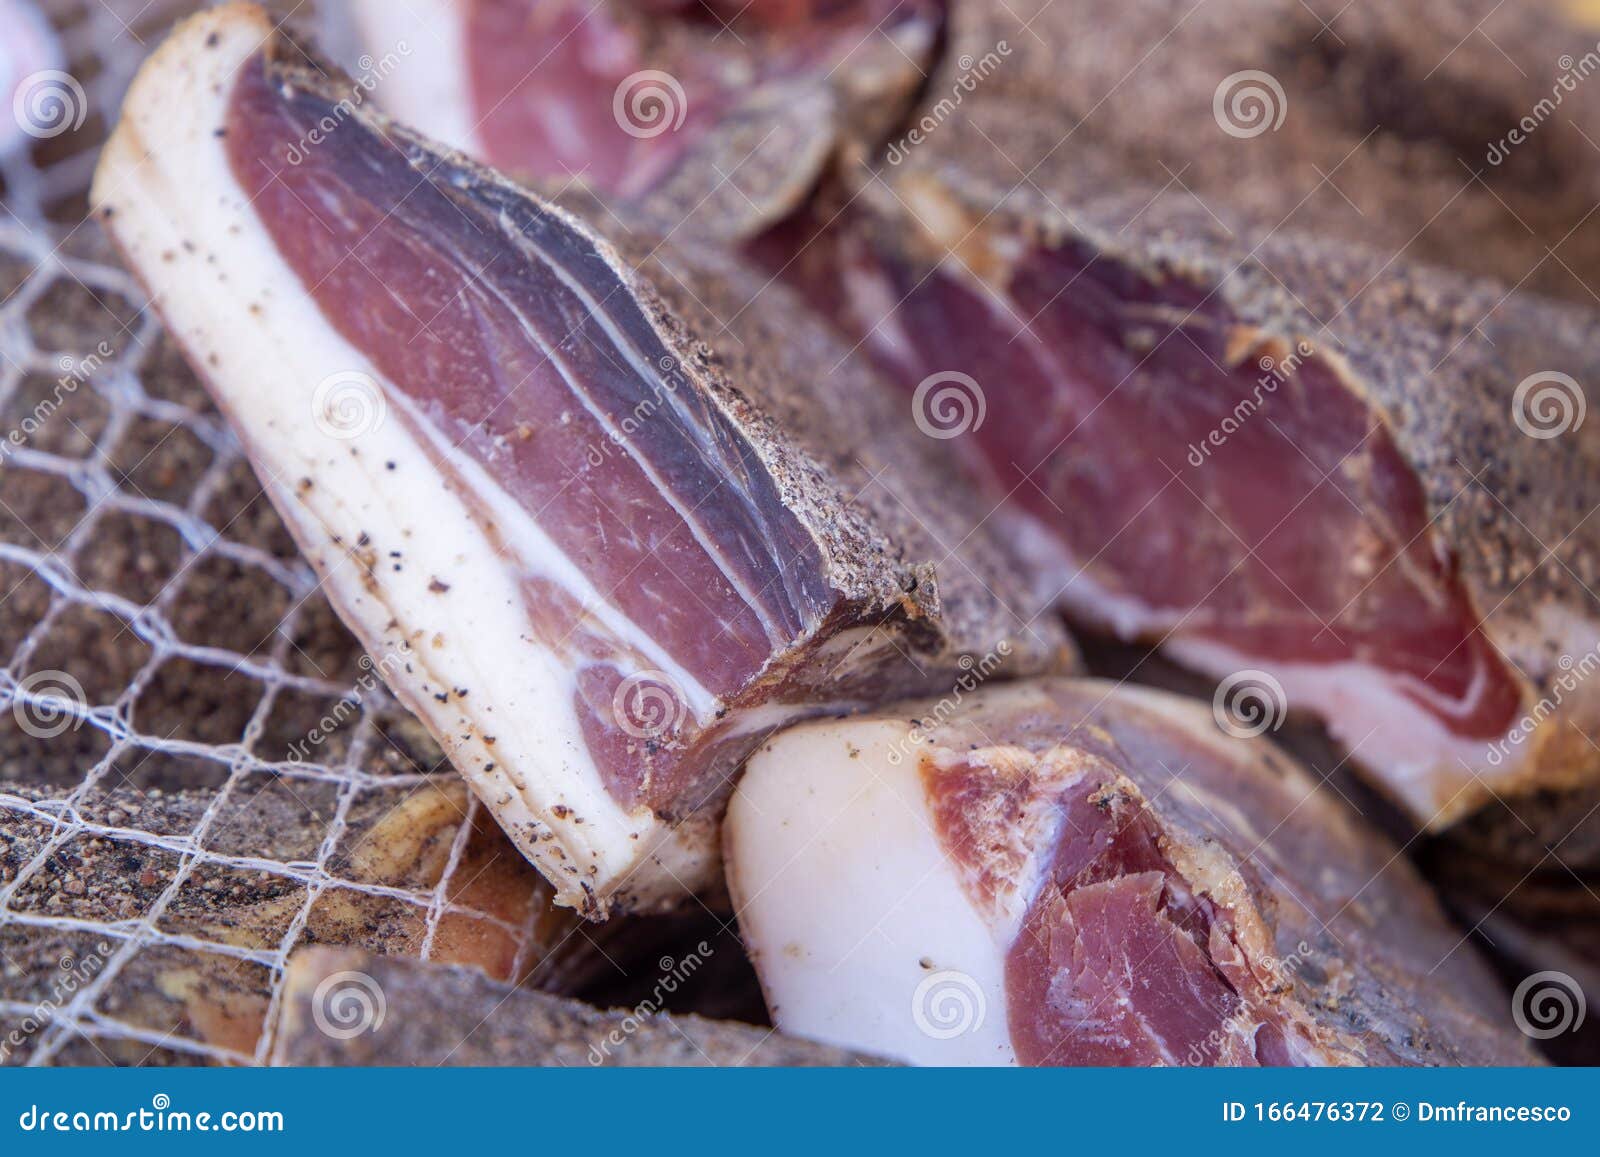 mortadelle ham pork salami, italian production